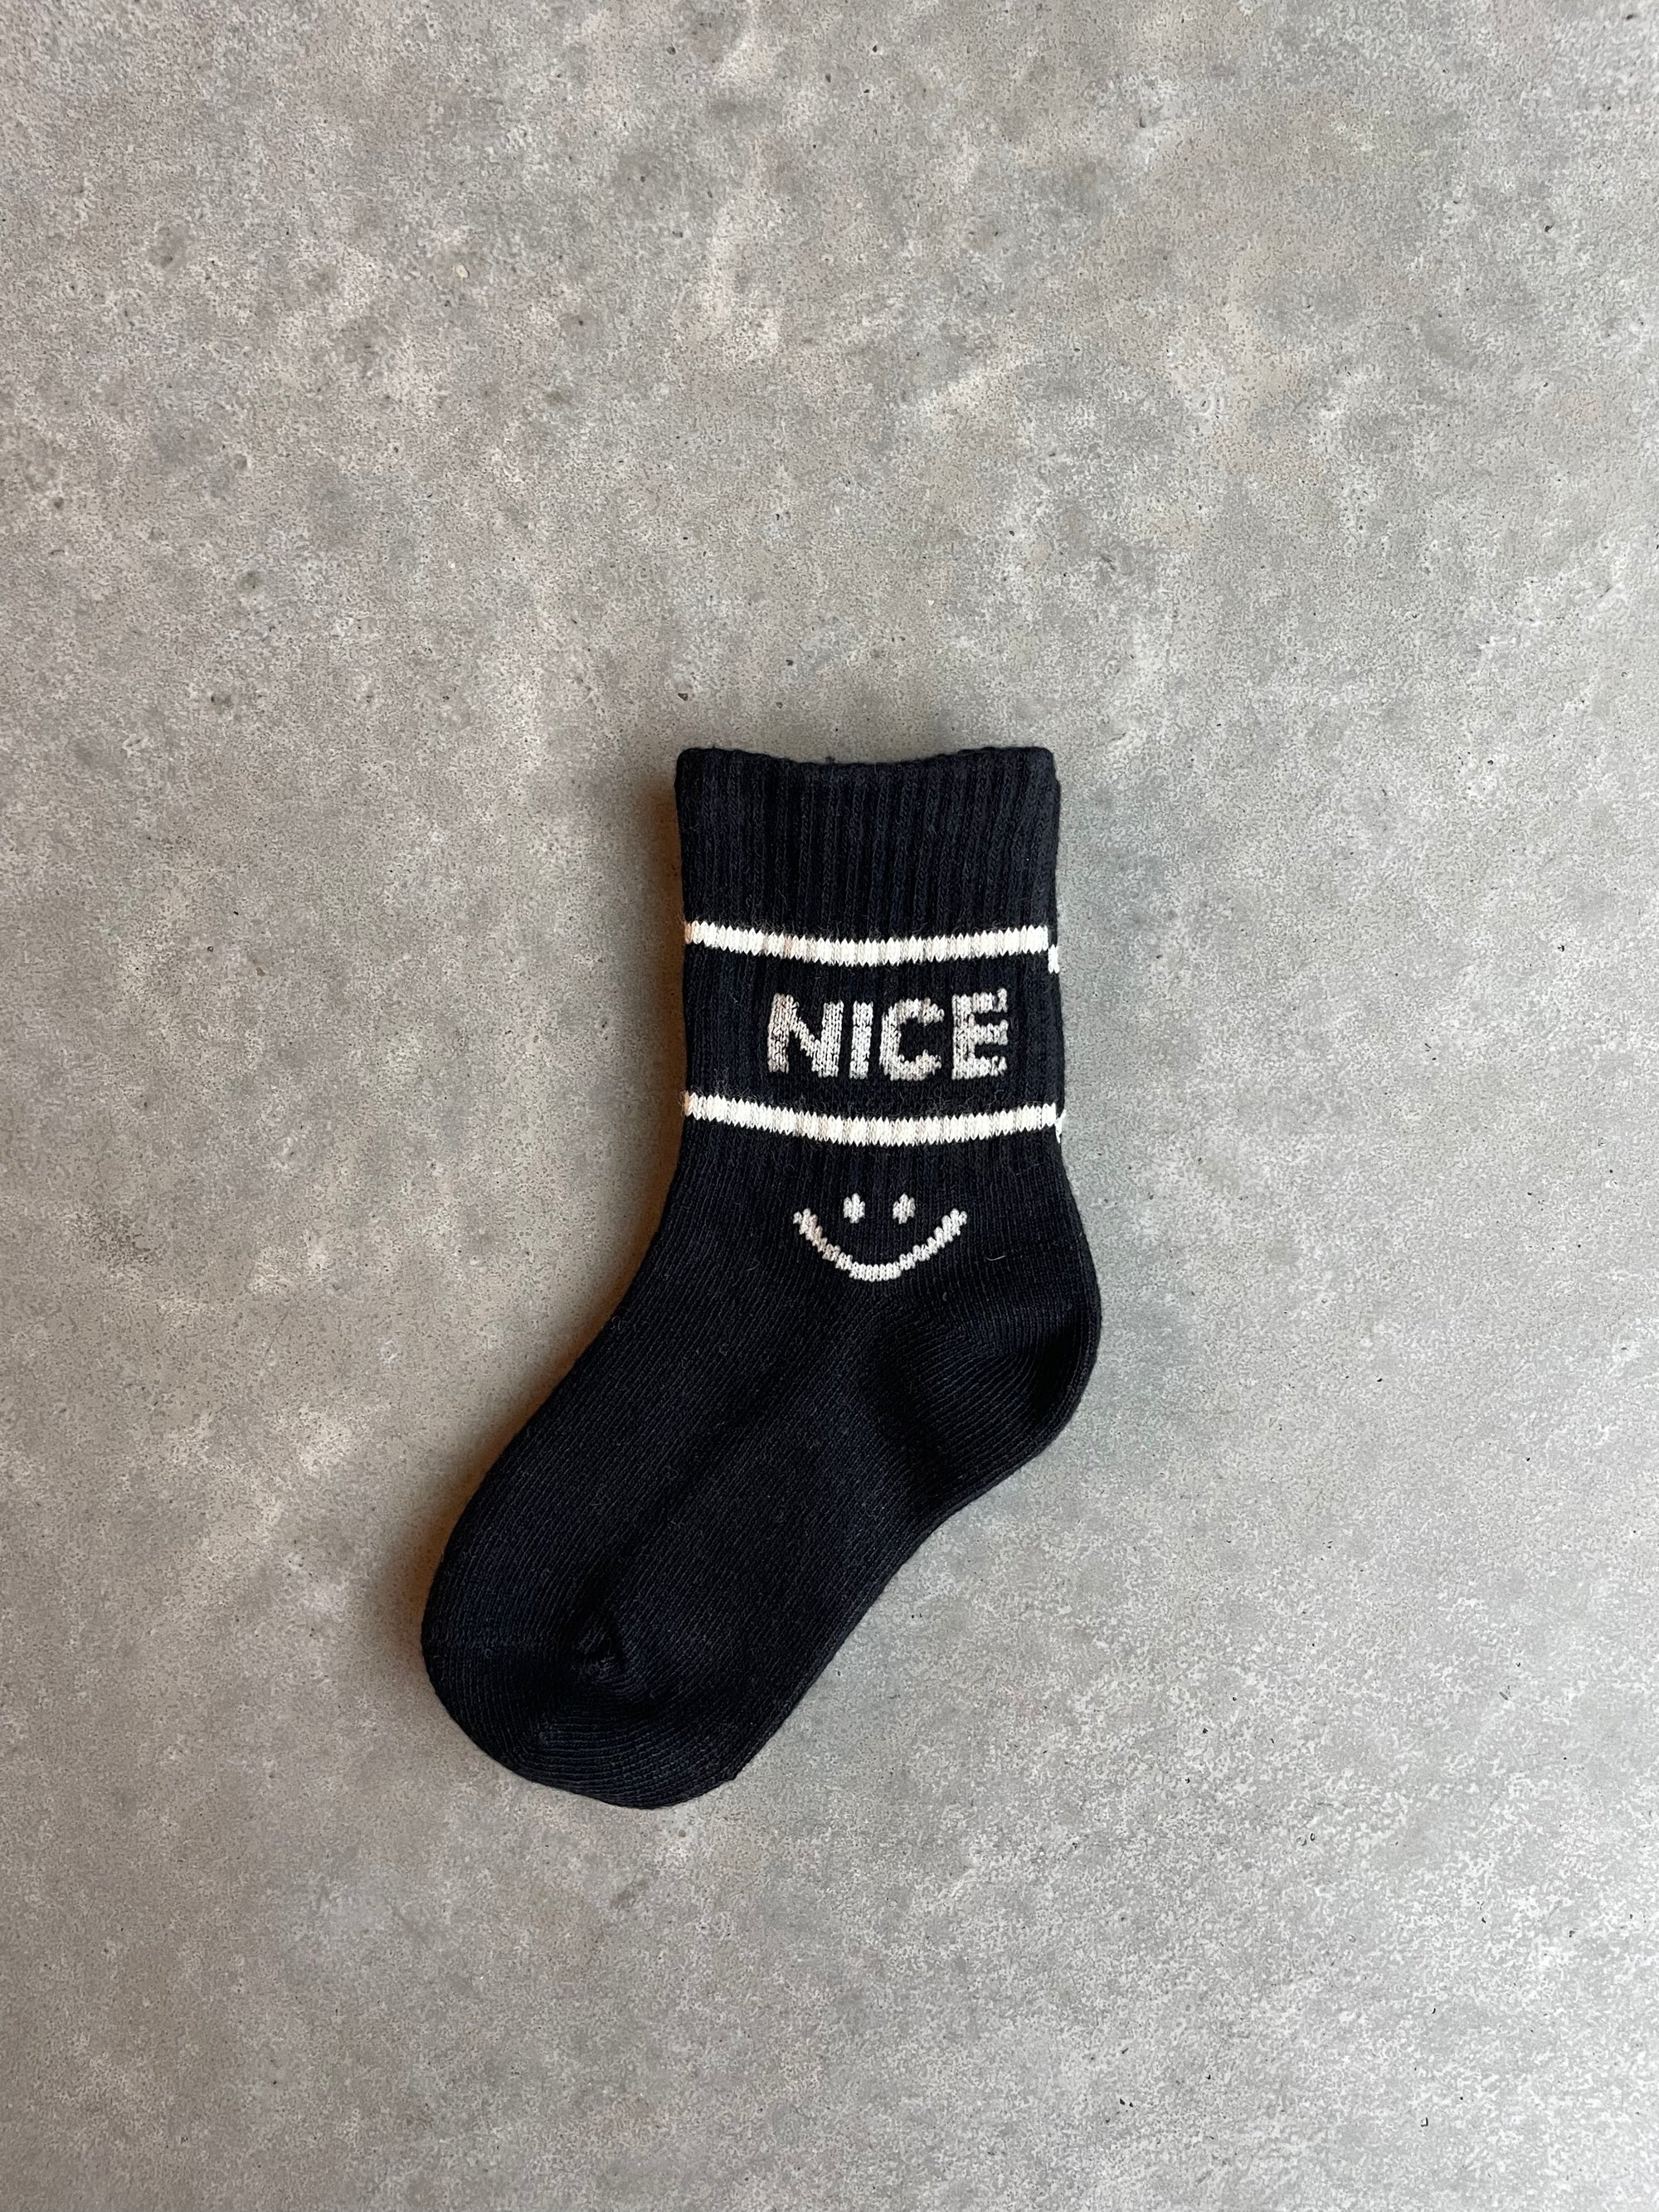 Smiley socks - black & white